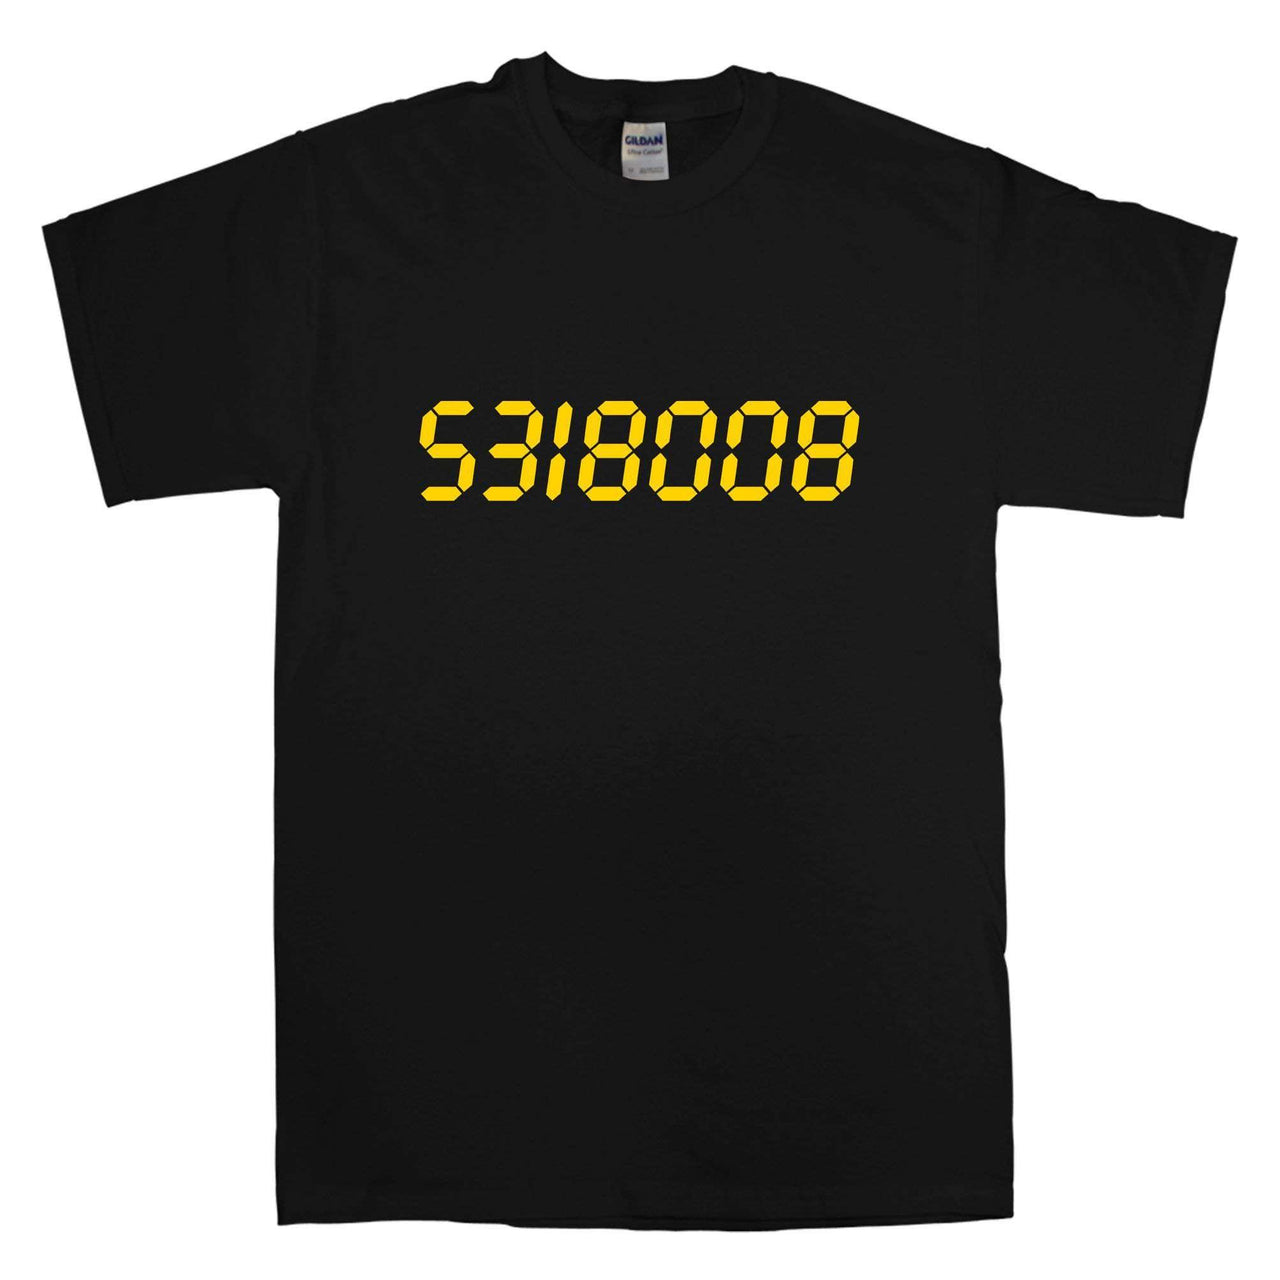 Funny 5318008 Mens T-Shirt 8Ball